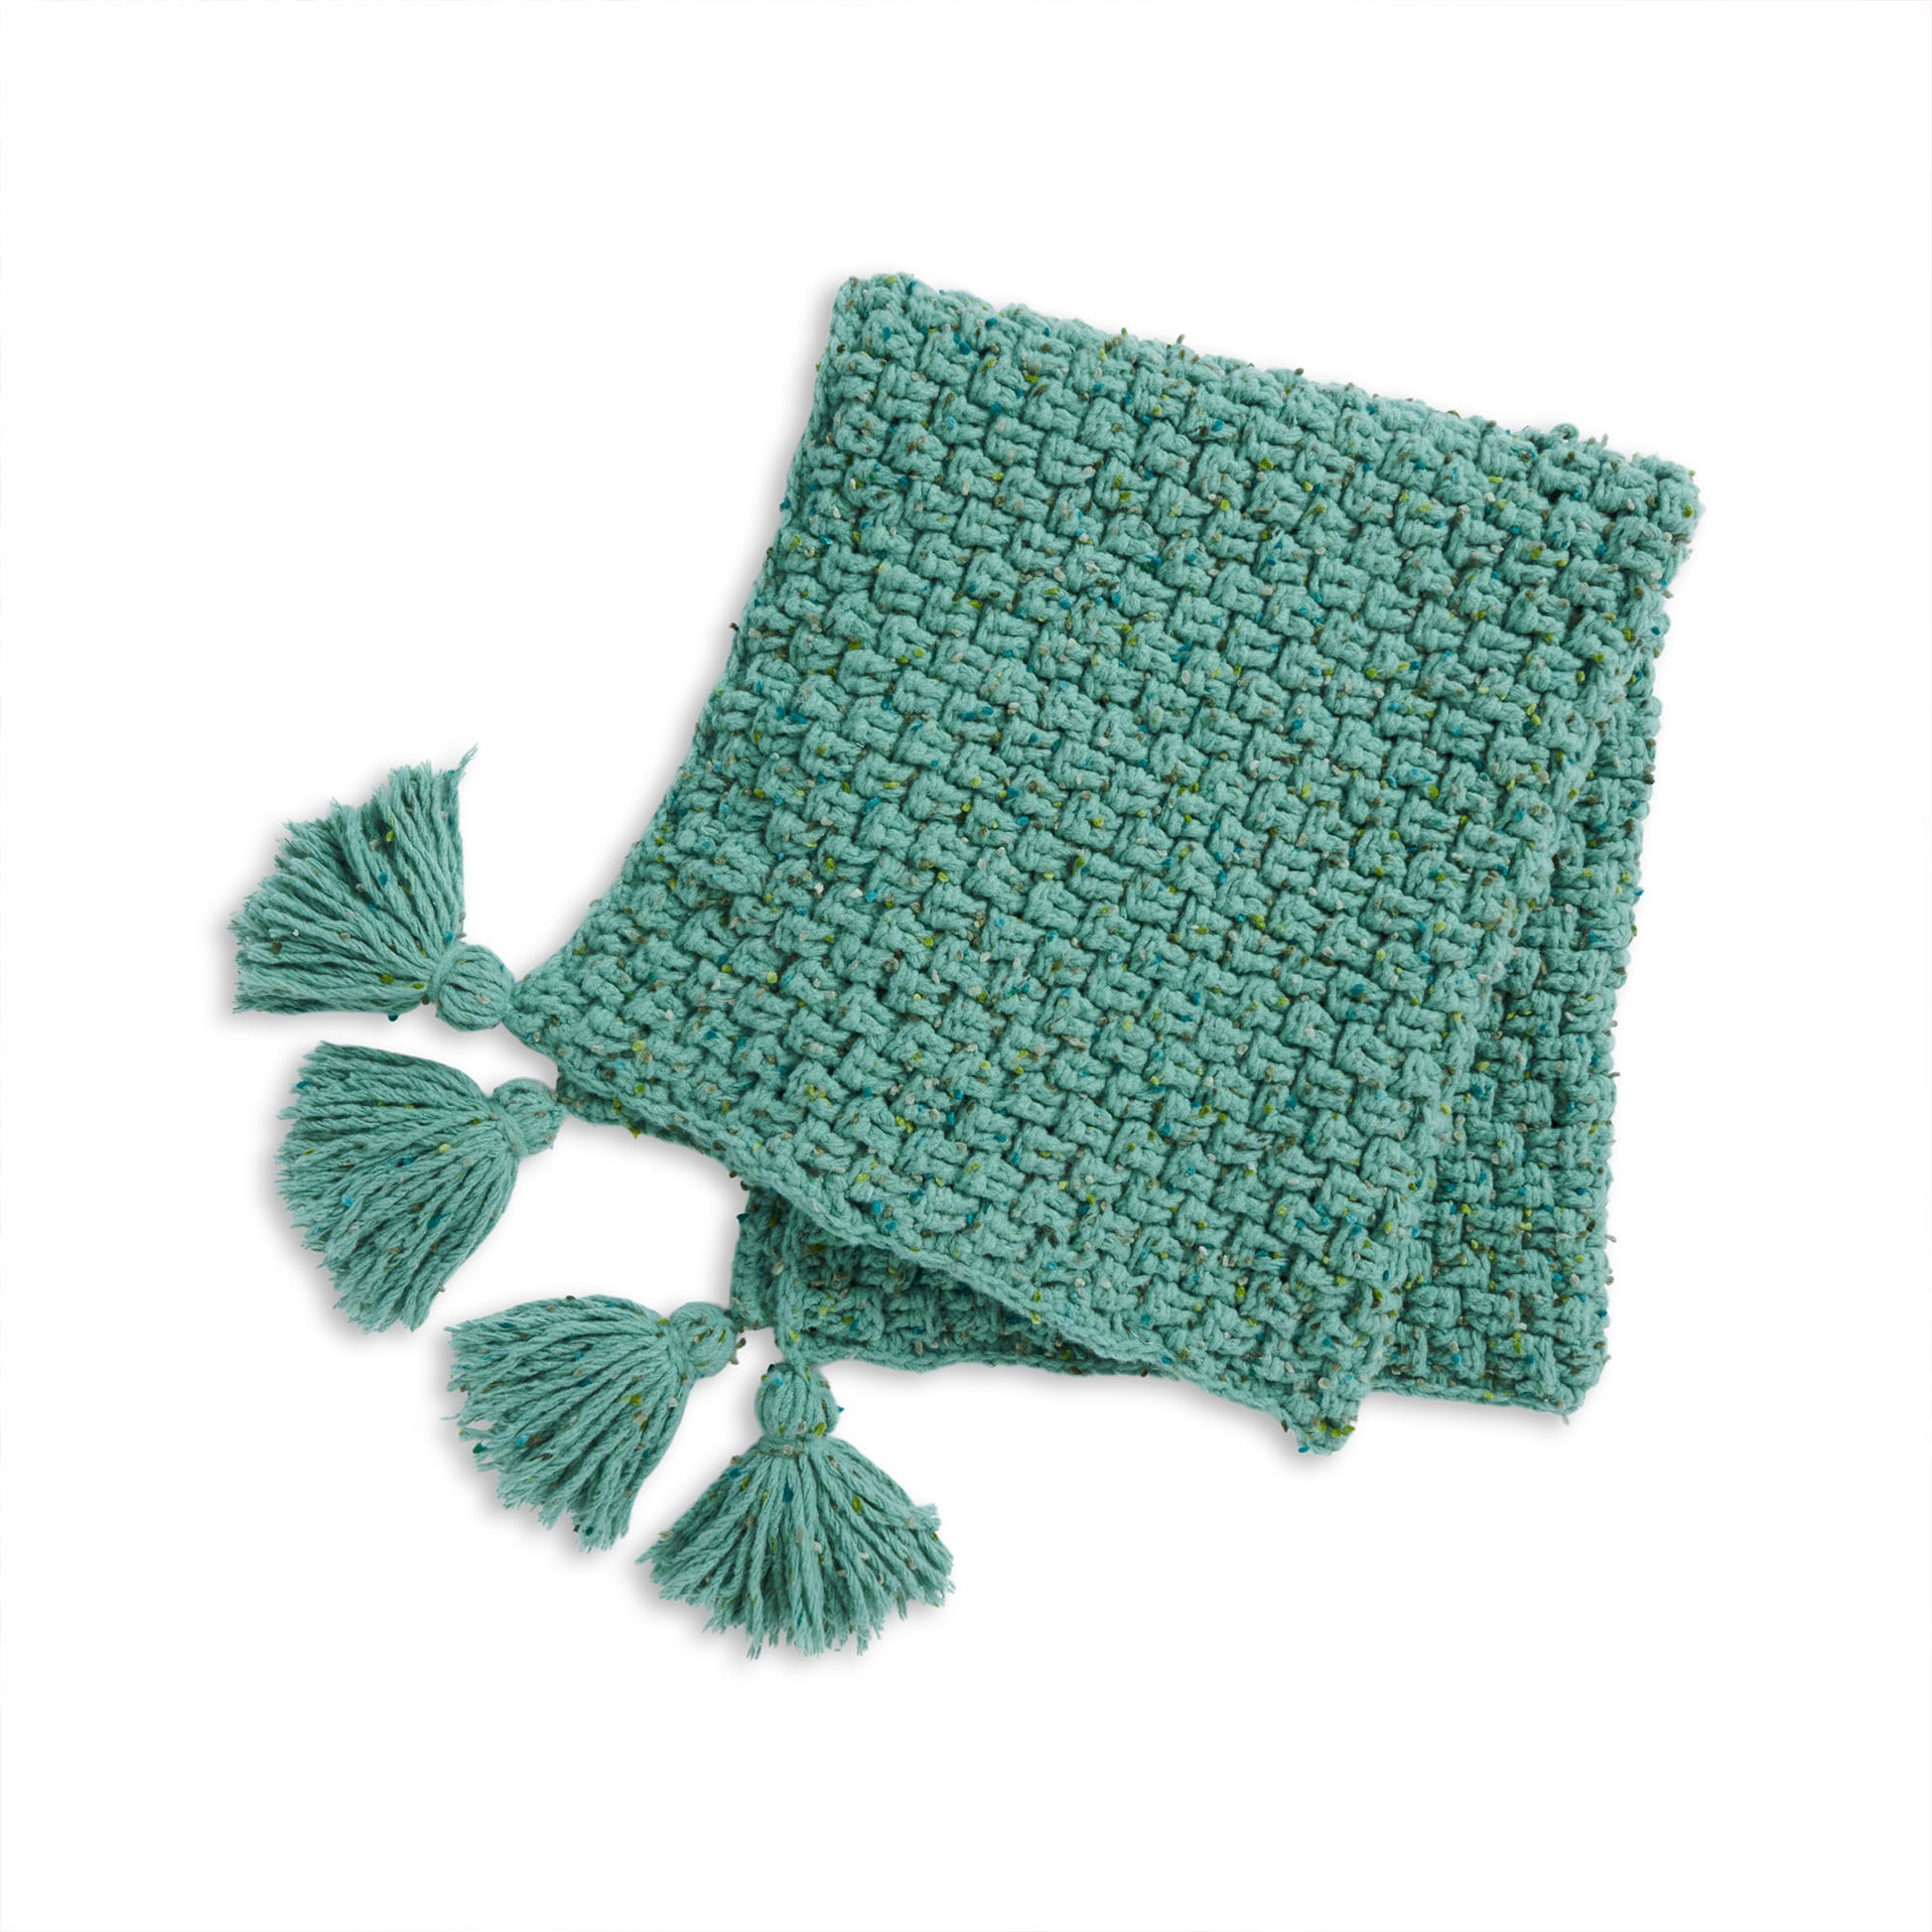 Free Bernat Forever Fleece Crochet Basketweave Blanket Pattern